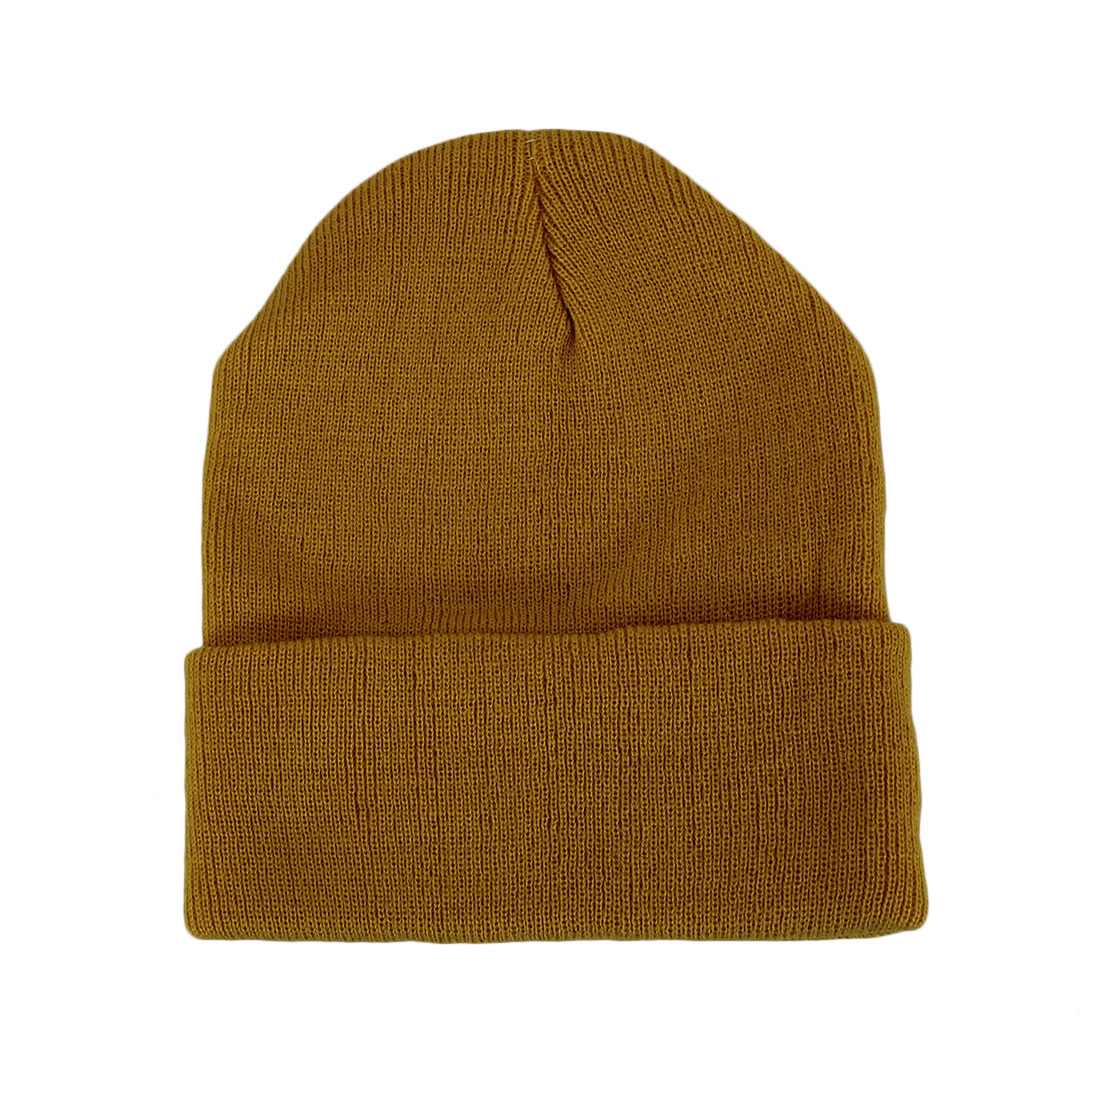 * Plain knitted winter cap